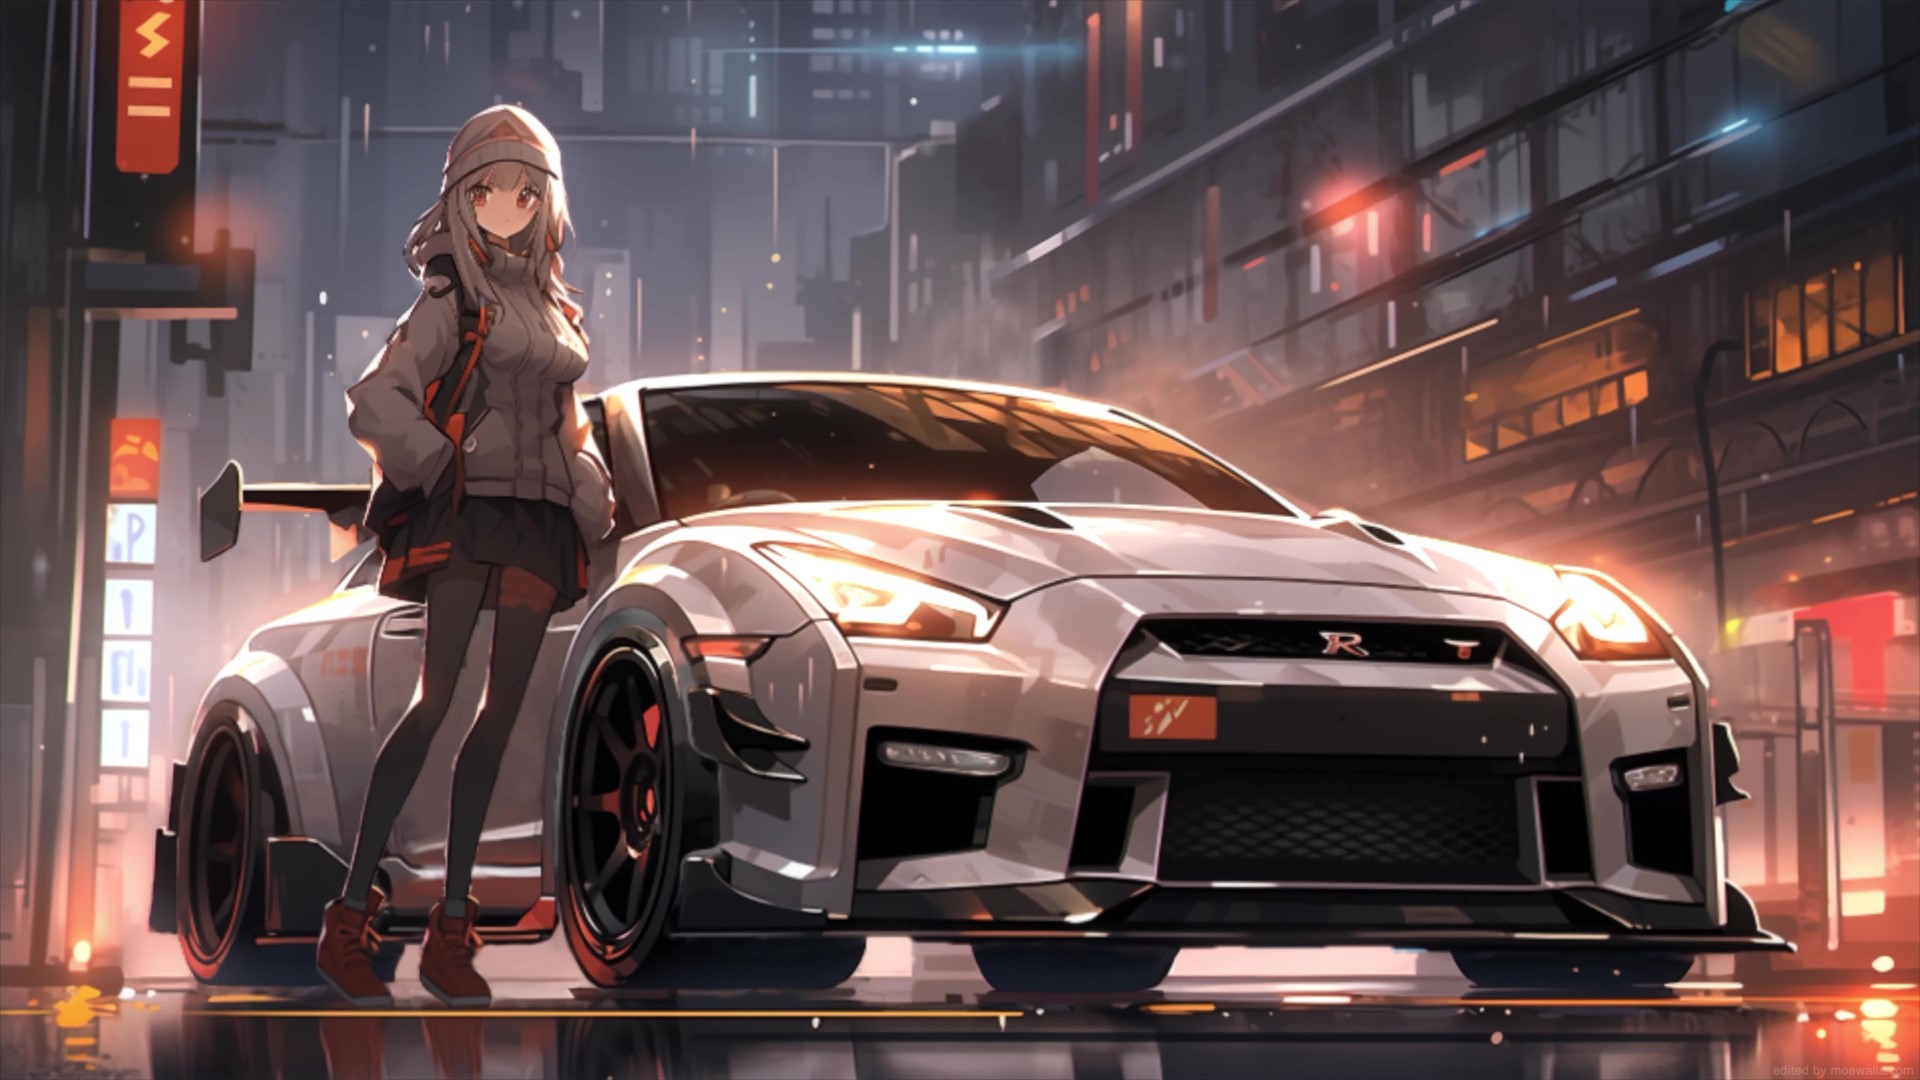 Anime Girl And Nissan GTR Live Wallpaper - MoeWalls